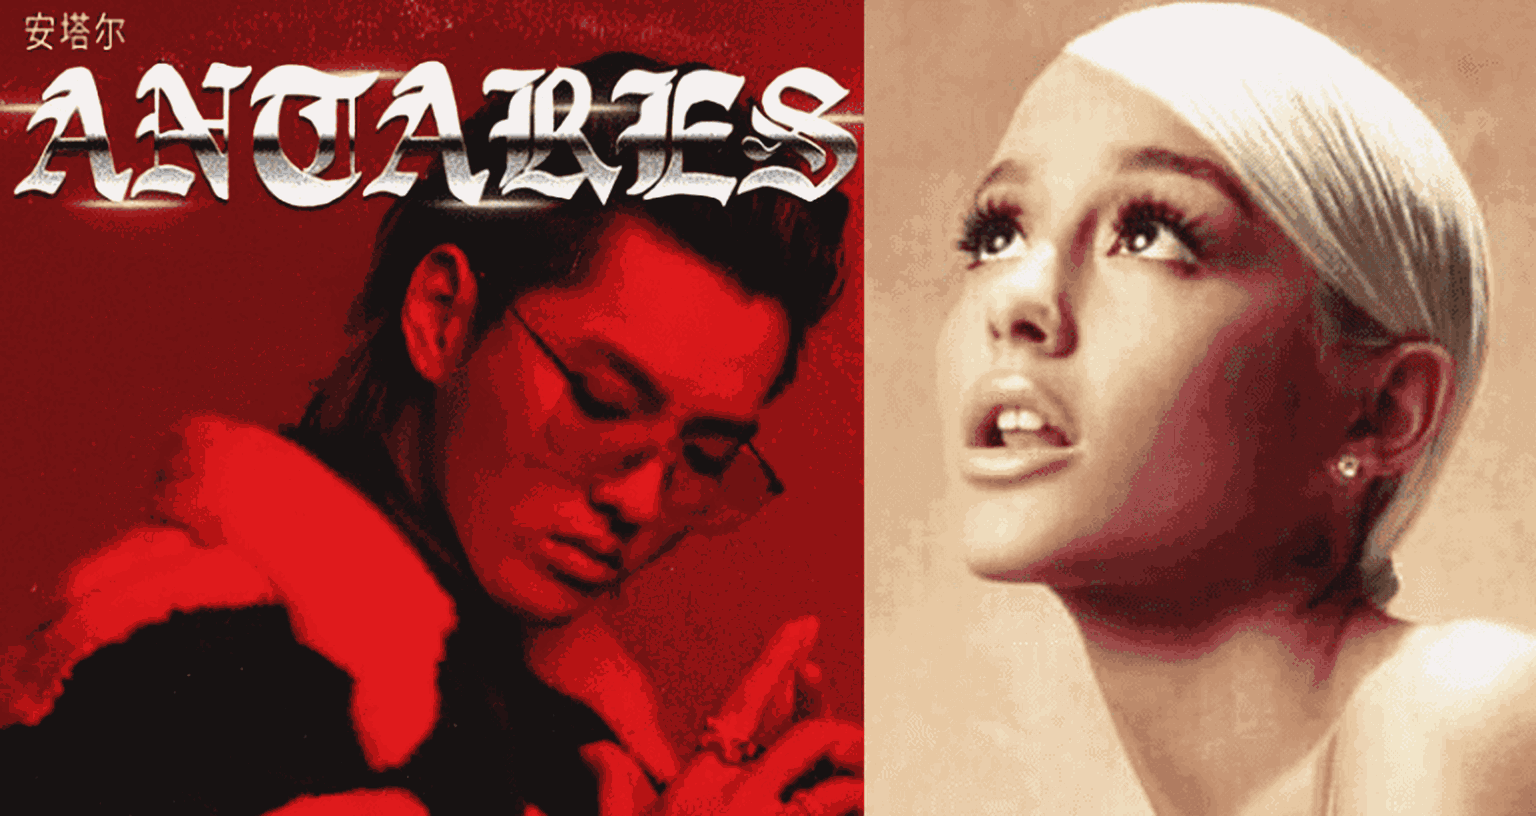 Kris Wu is Legit, But This Ariana Grande ‘Drama’ Never Was